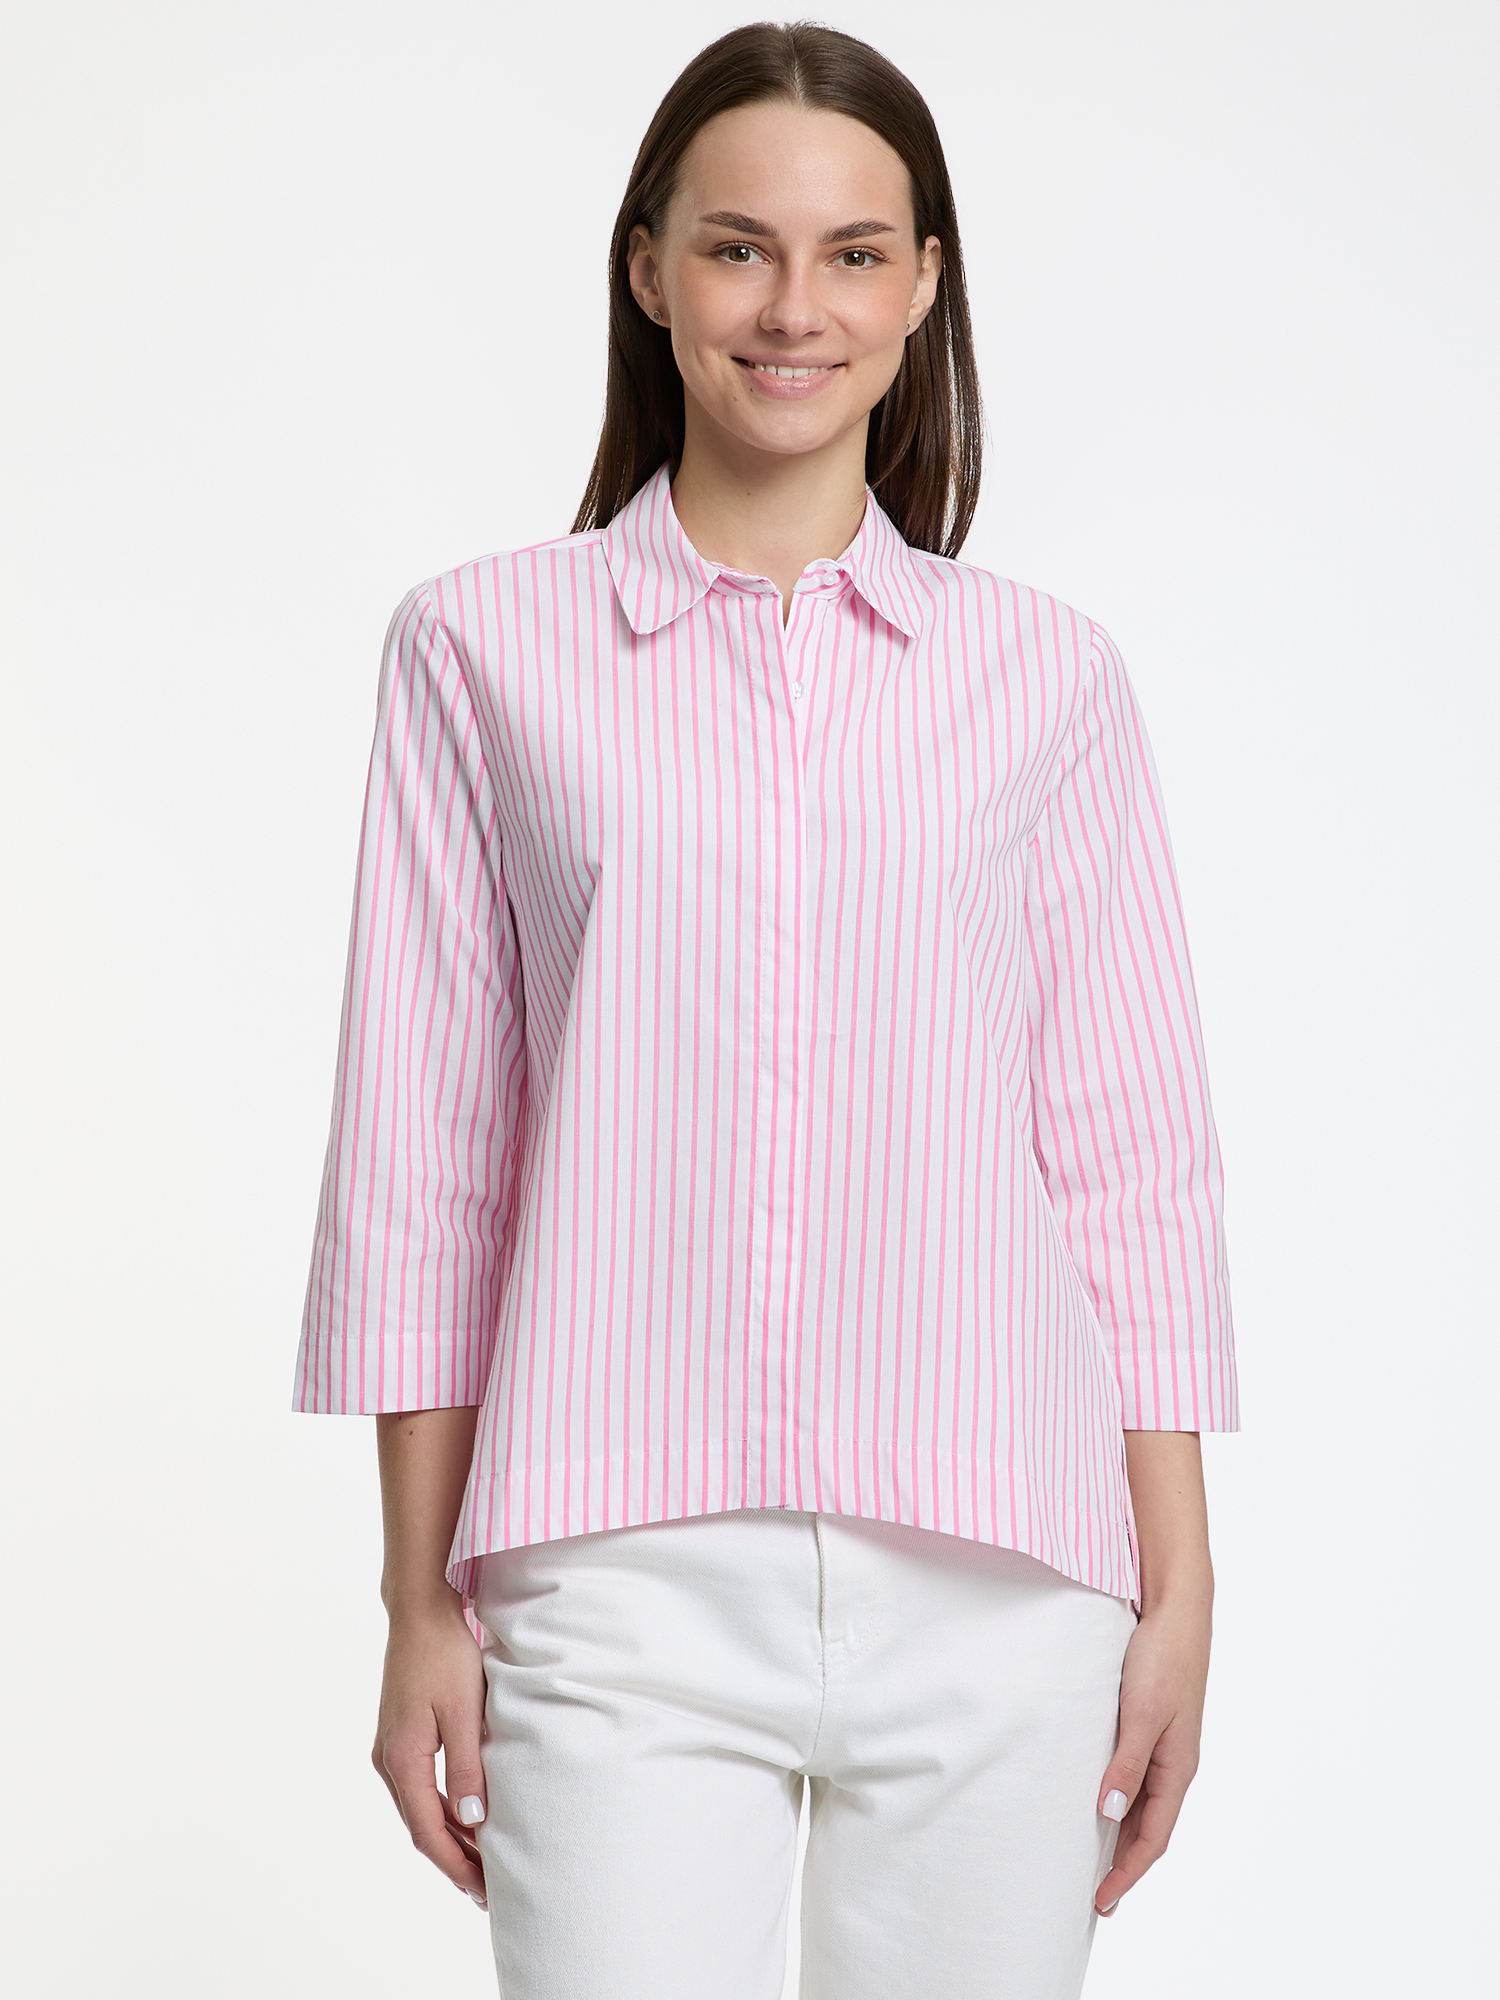 Рубашка женская oodji 13K11002-11B розовая 42